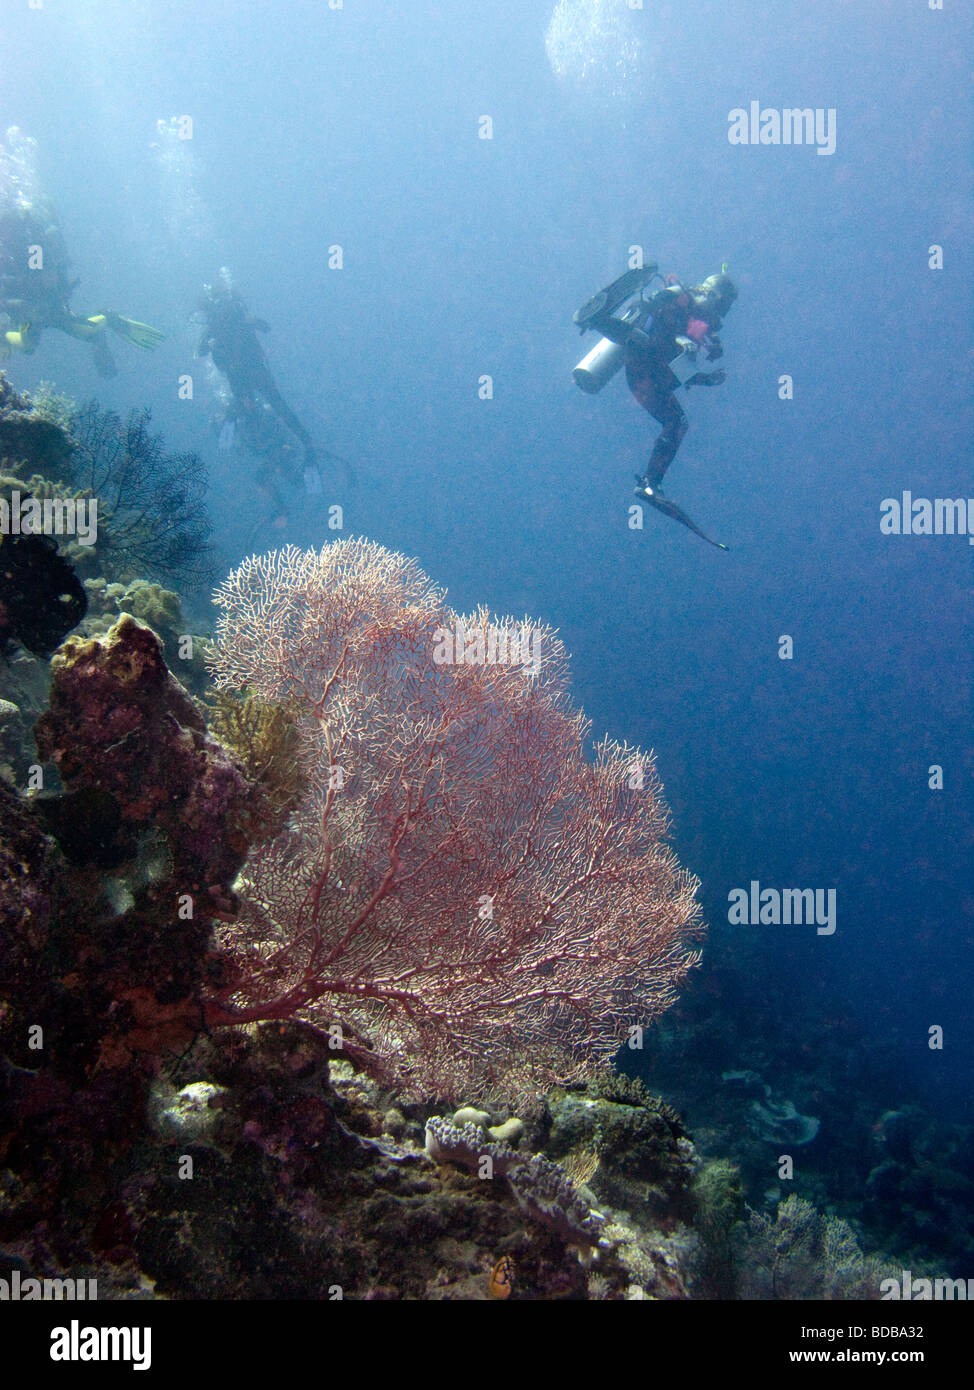 Indonesia Sulawesi Wakatobi National Park underwater scuba diver swimming above gorgonian sea fan on coral reef Stock Photo